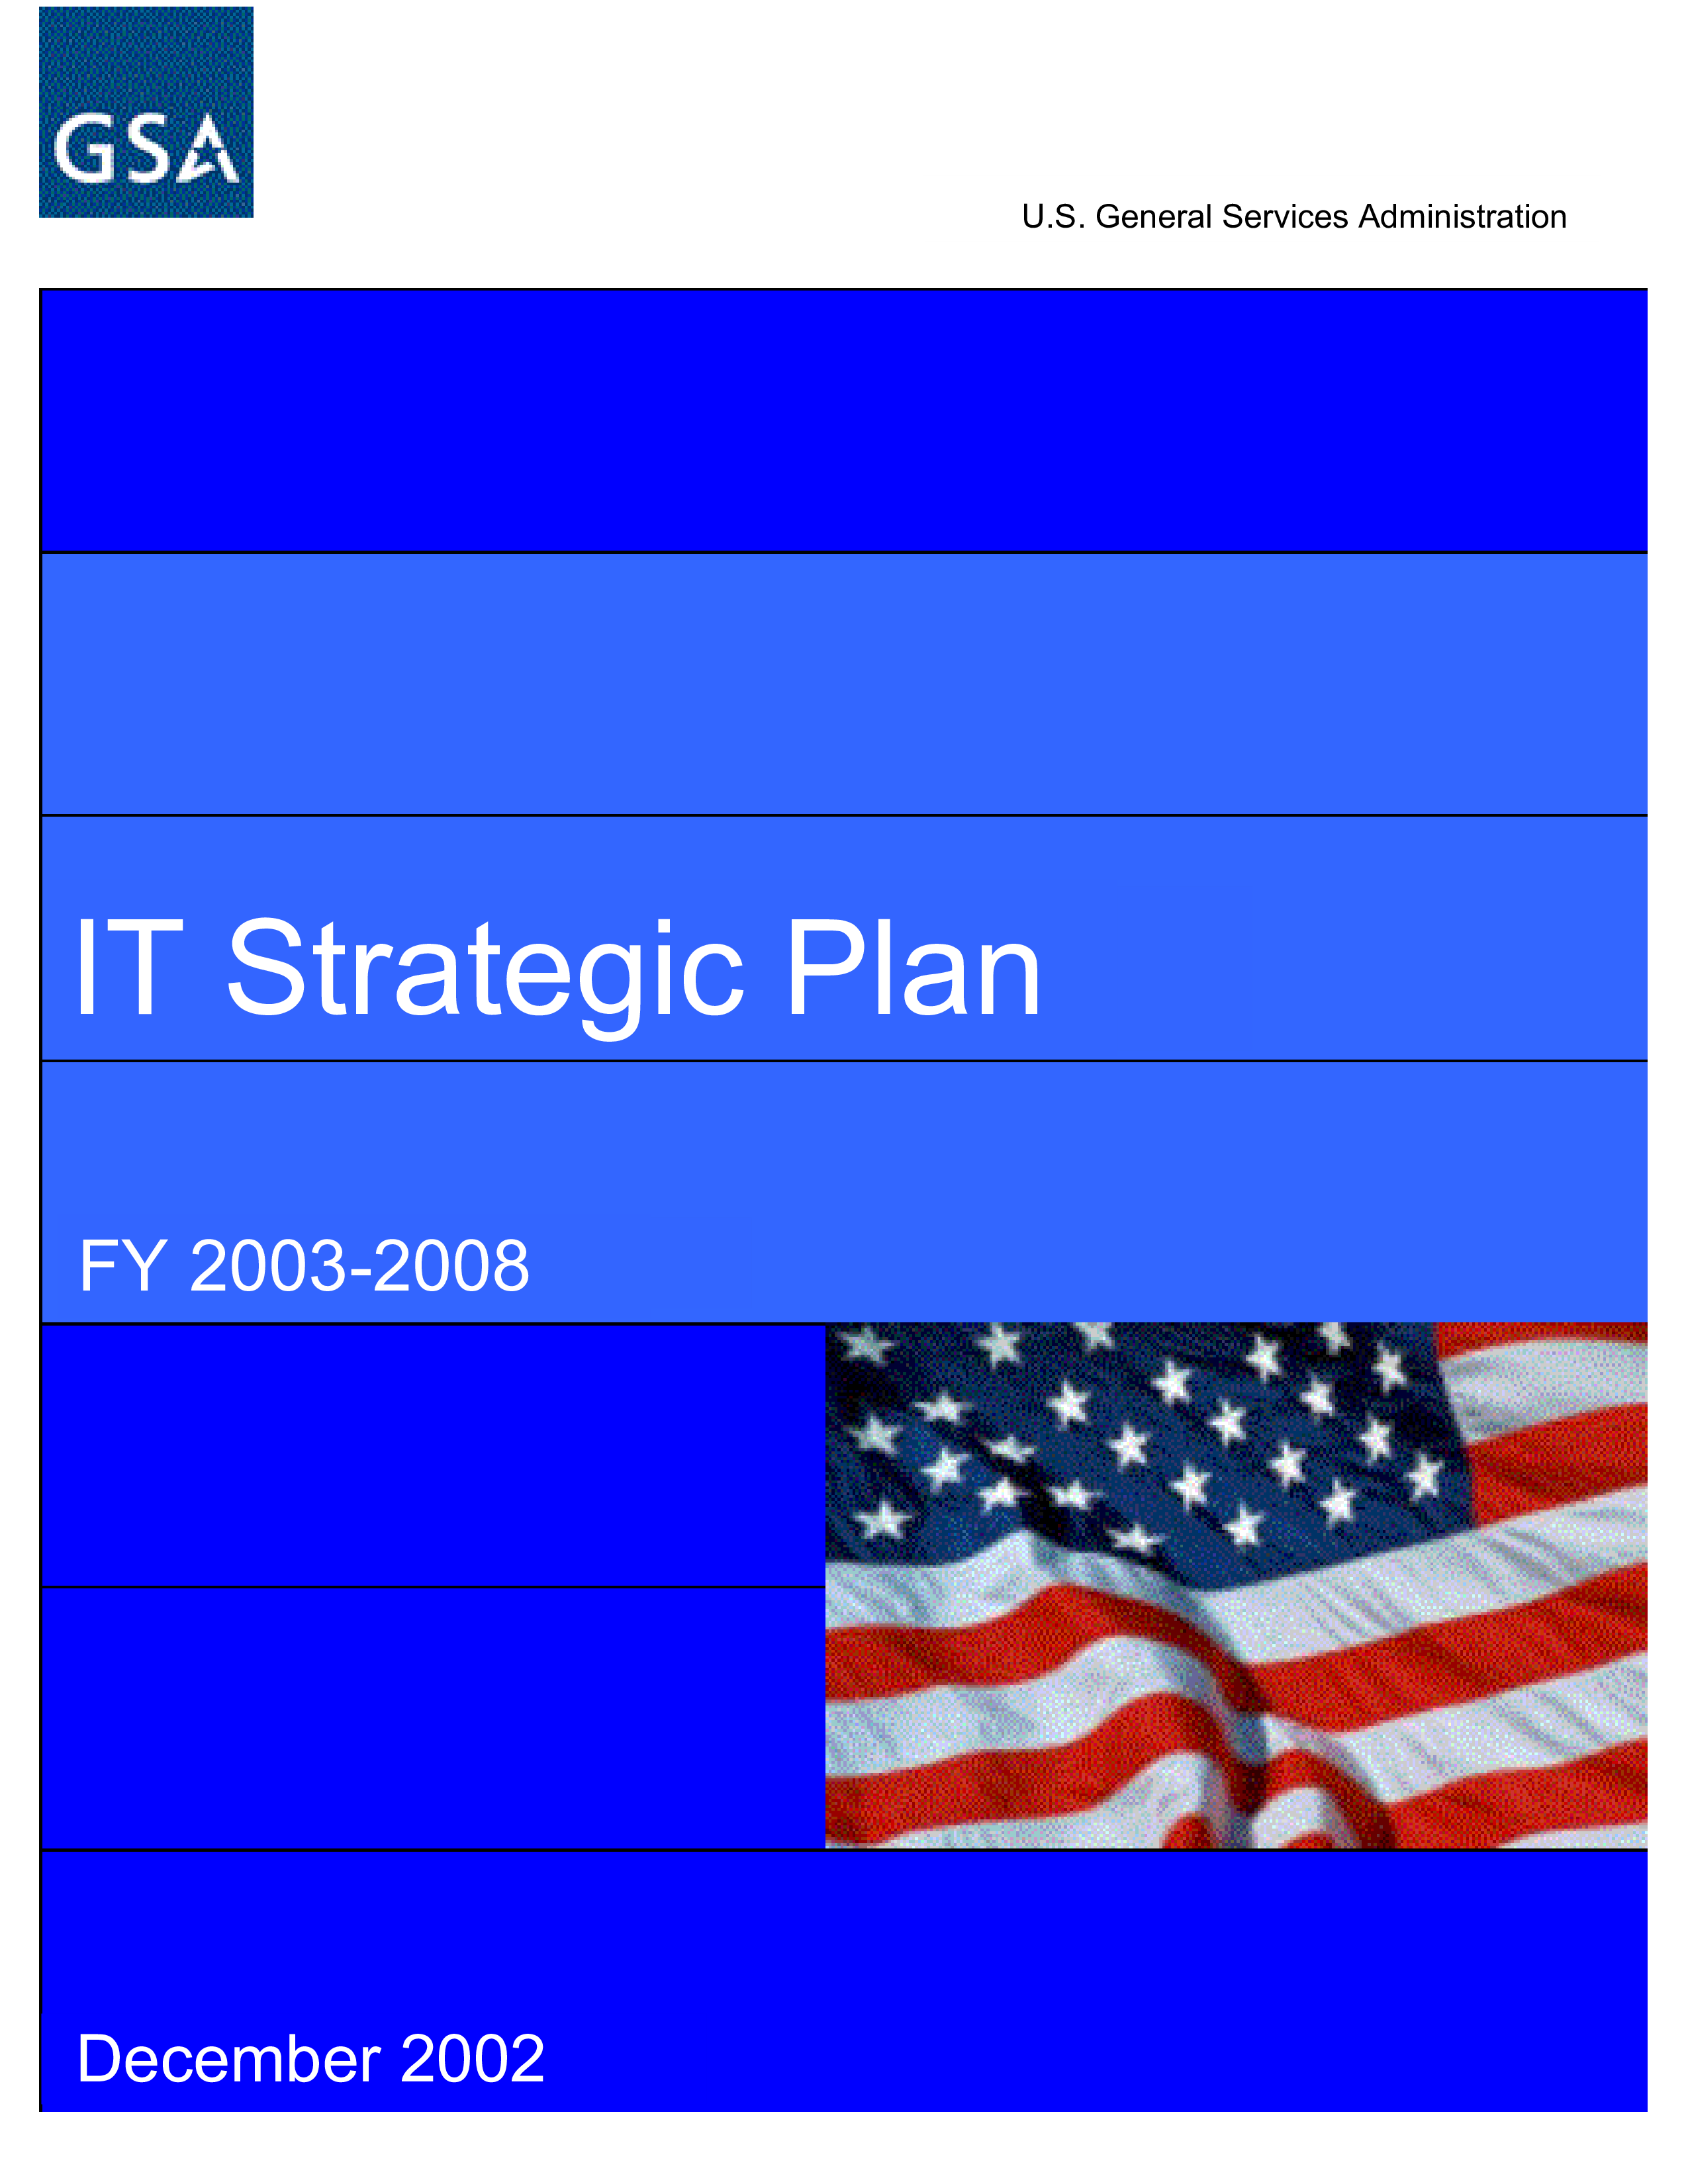 IT Strategic Business Plan 模板